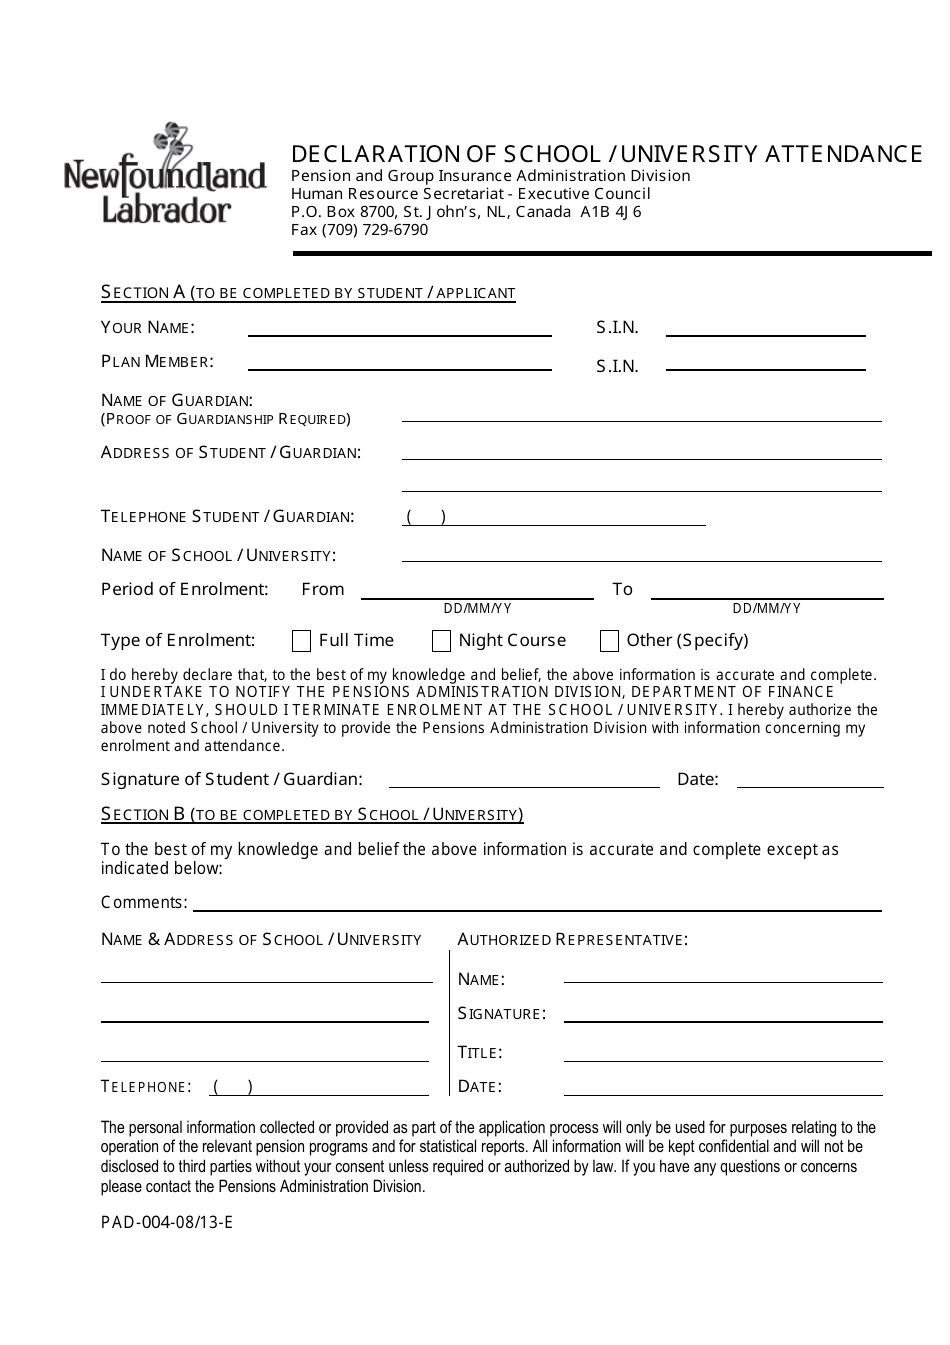 Form PAD-004 Declaration of School / University Attendance - Newfoundland and Labrador, Canada, Page 1